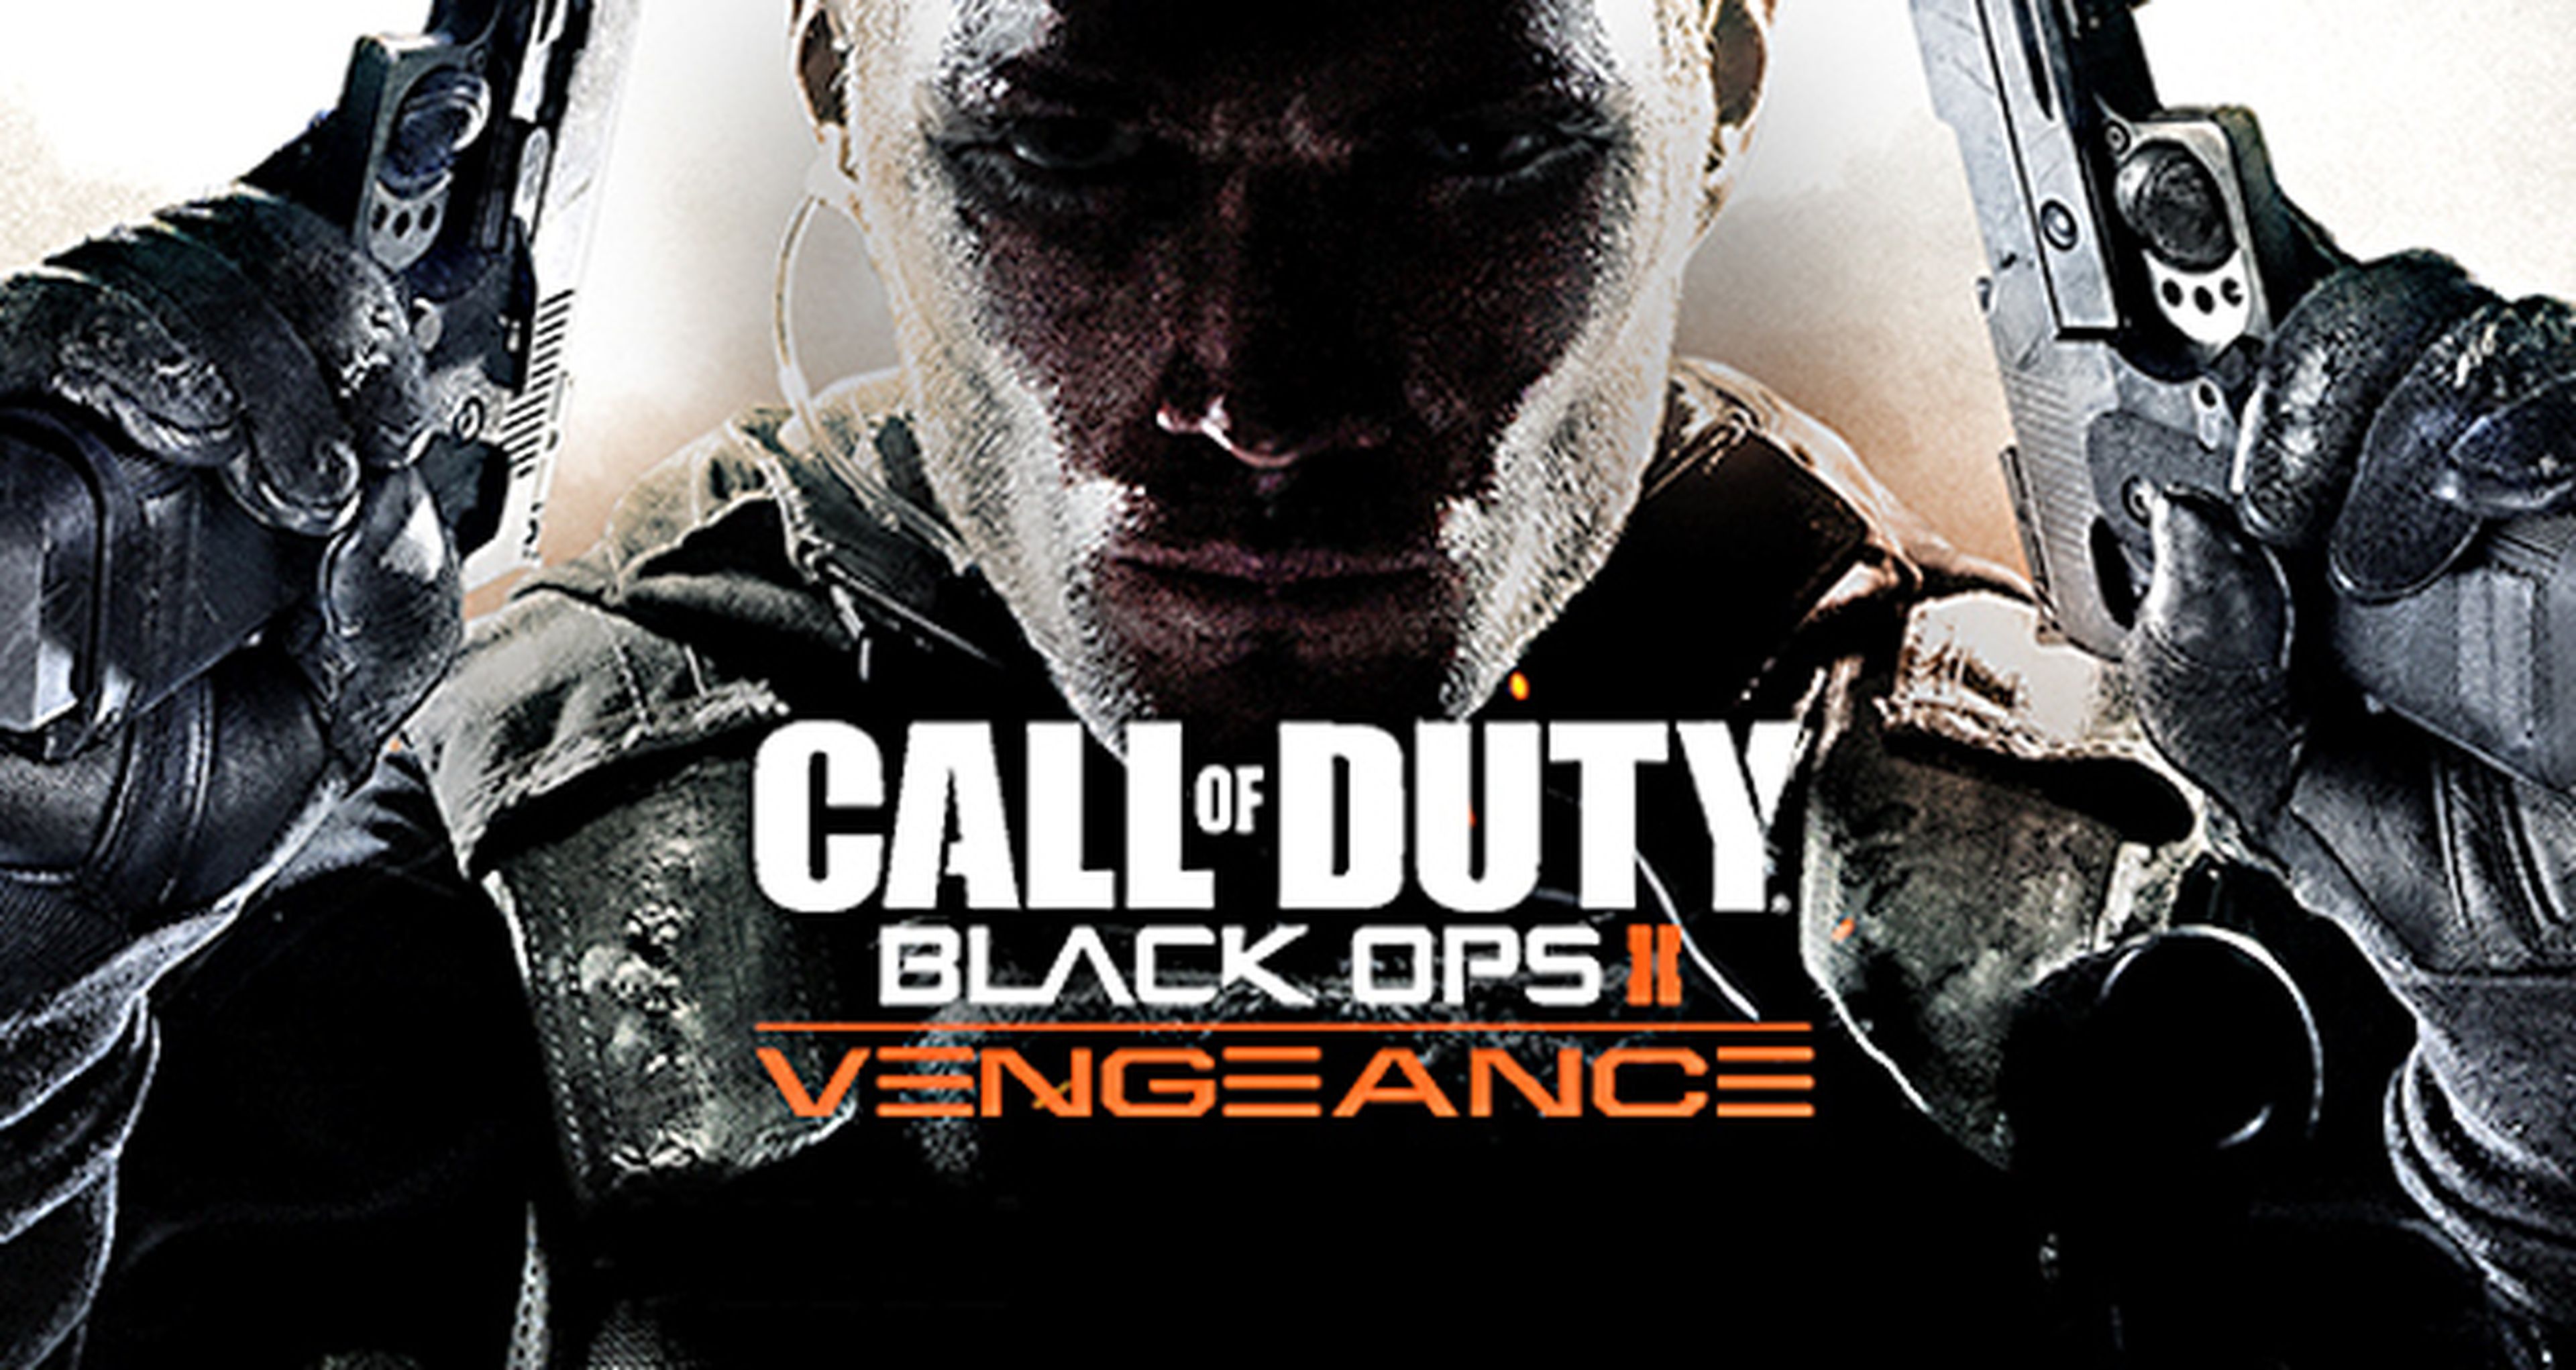 Vengeance, nuevo pack DLC de Call of Duty Black Ops II